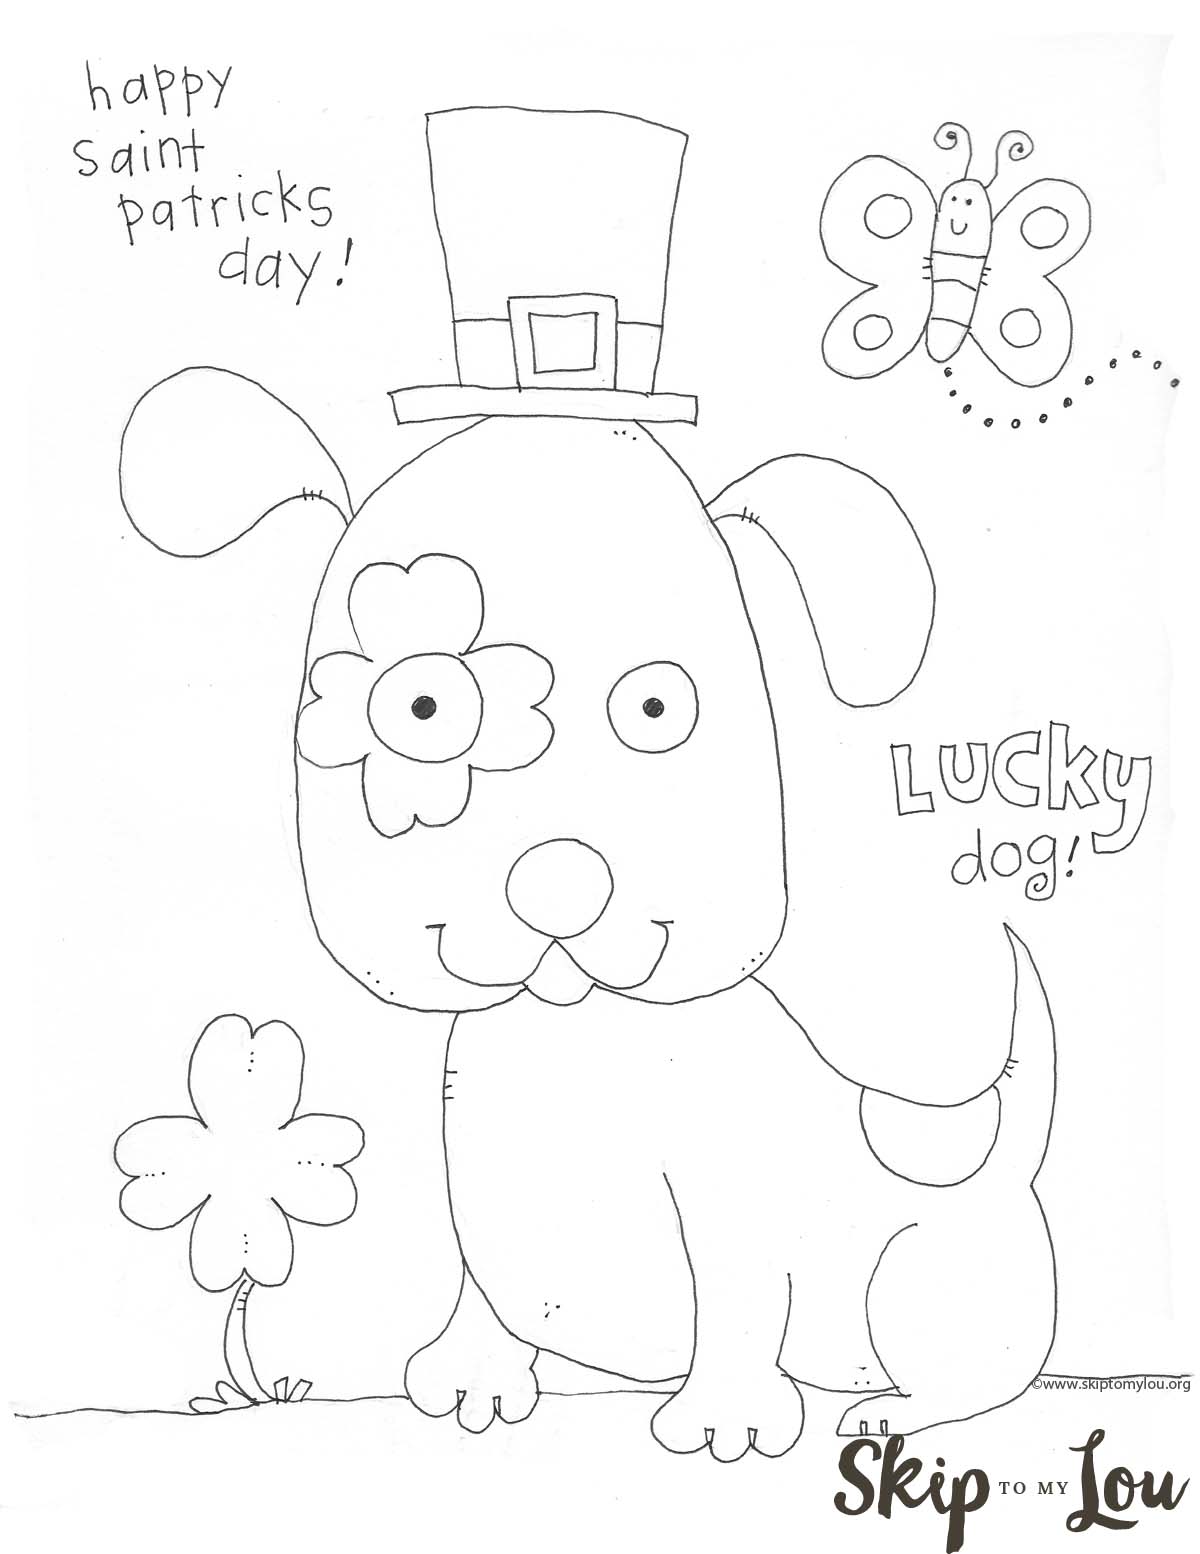 saint patricks day coloring pages preschool - photo #1